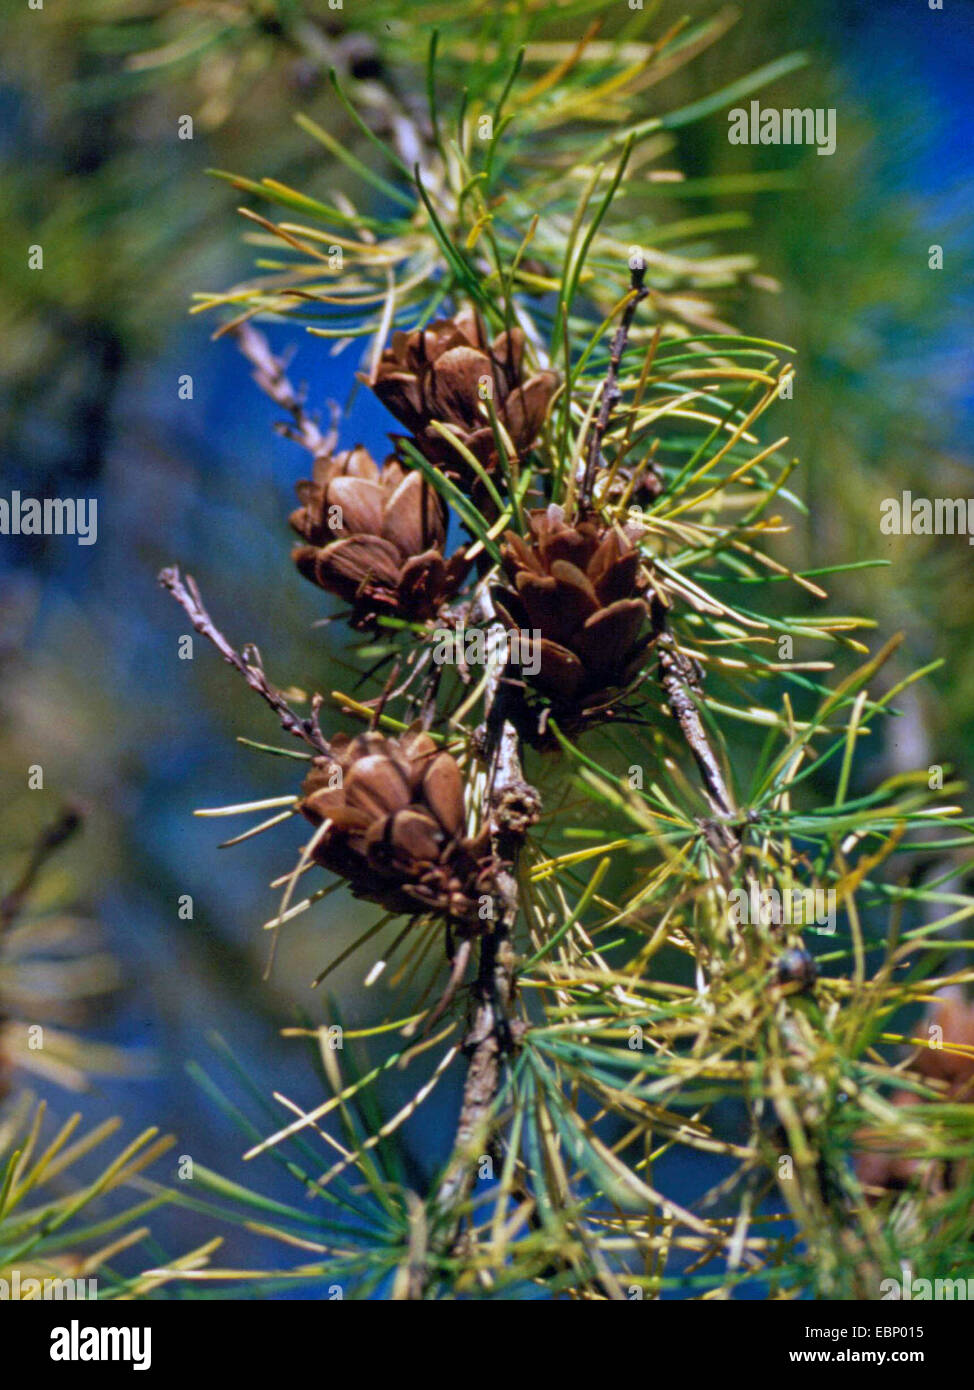 Tamarack Larch, Tamarack, Hackmatack, American Larch (Larix laricina), branch with cones Stock Photo